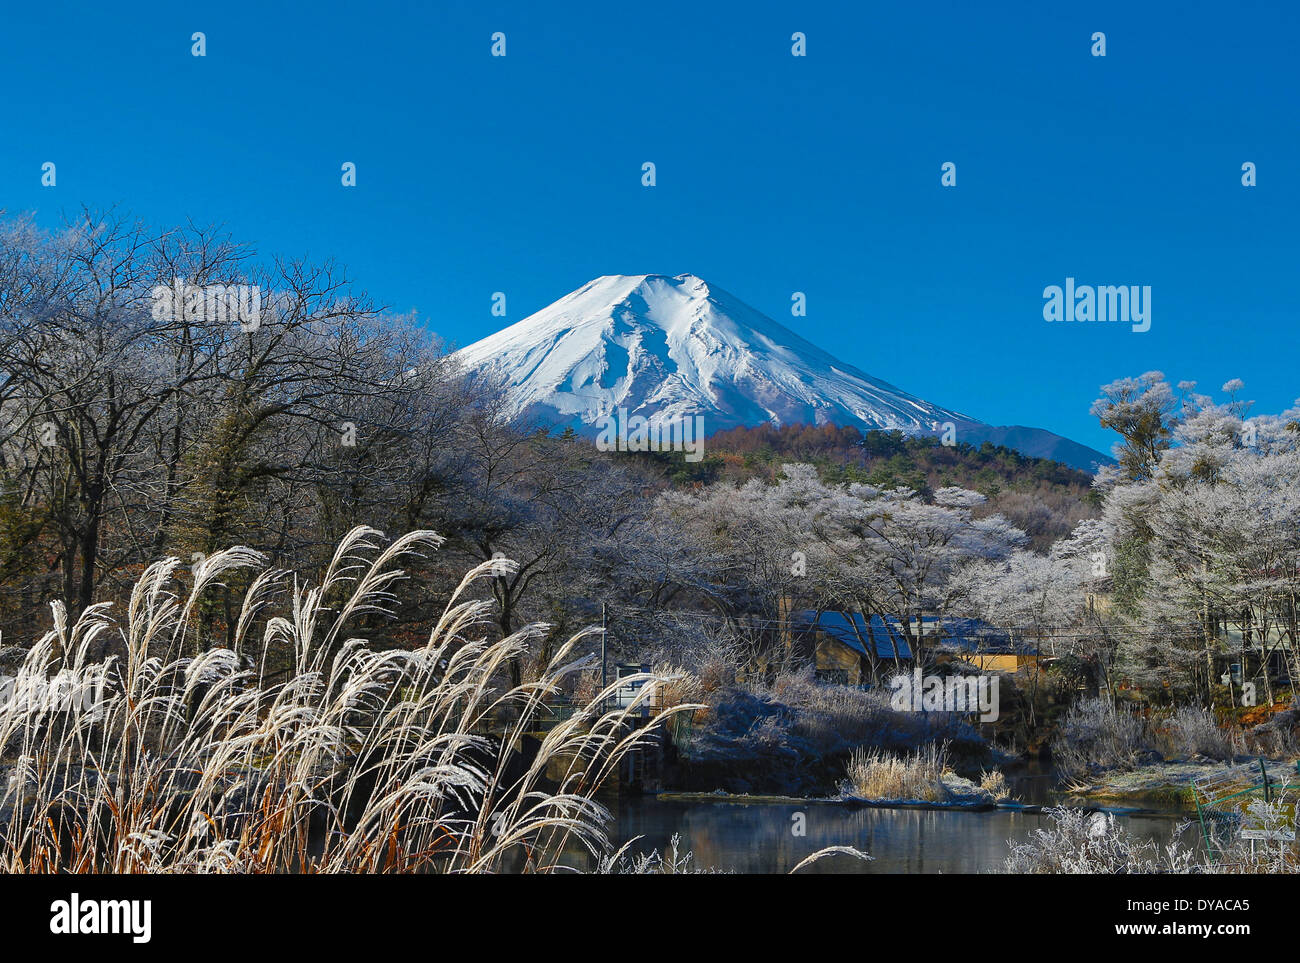 Japan, Asien, Mount Fuji, Herbst, klar, bunt, Farben, frost, Fuji, Berg, Schnee, Symbol, Tourismus, Reisen, Oshino Mura Stockfoto